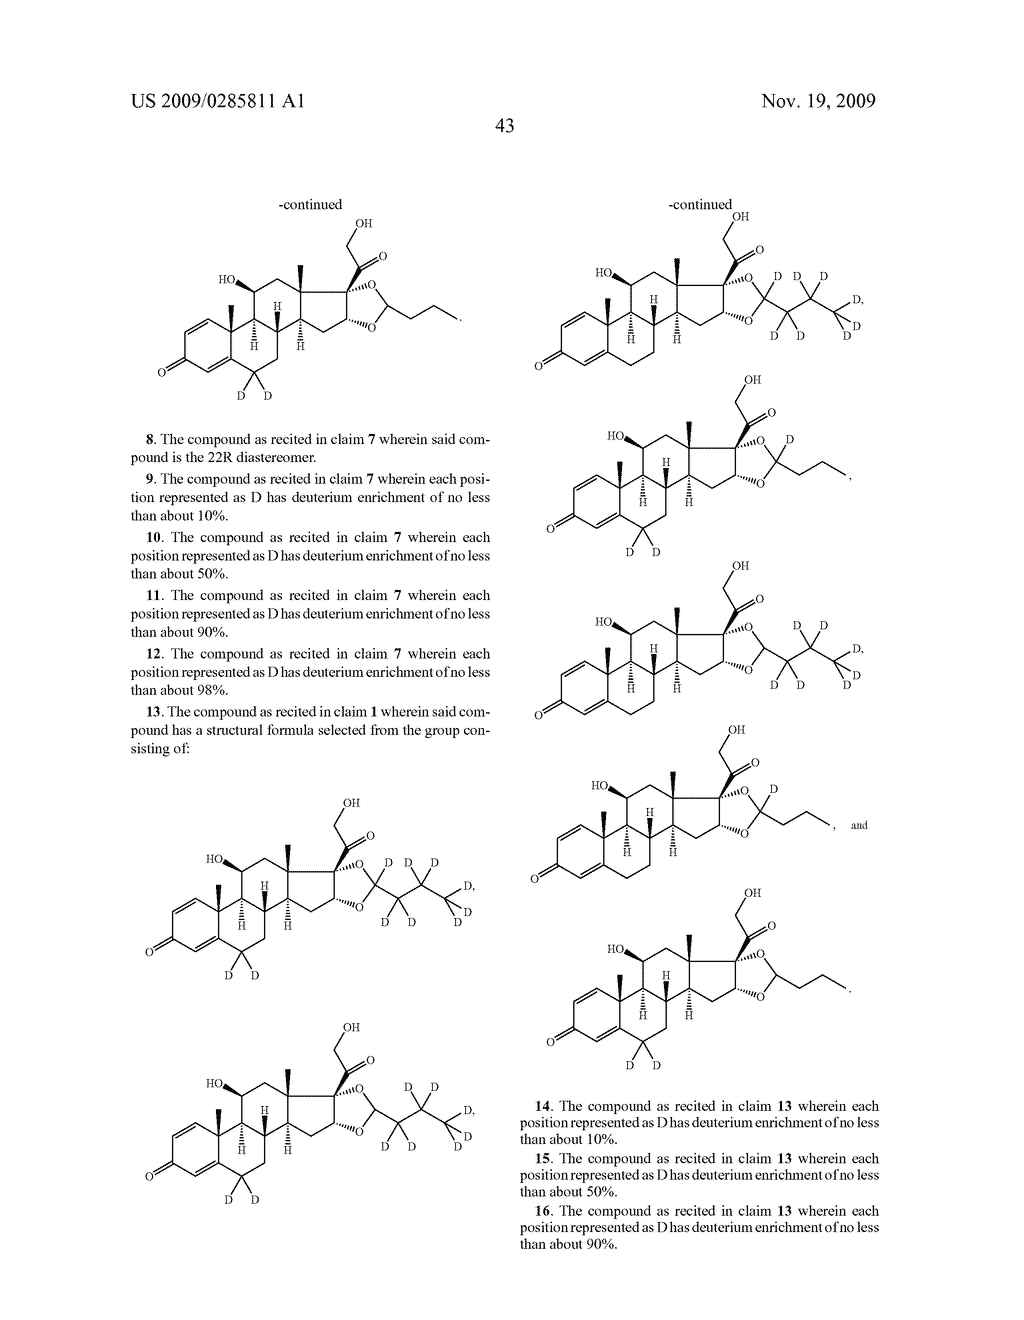 ANTI-INFLAMMATORY AND IMMUNOSUPPRESSIVE GLUCOCORTICOID STEROIDS - diagram, schematic, and image 44